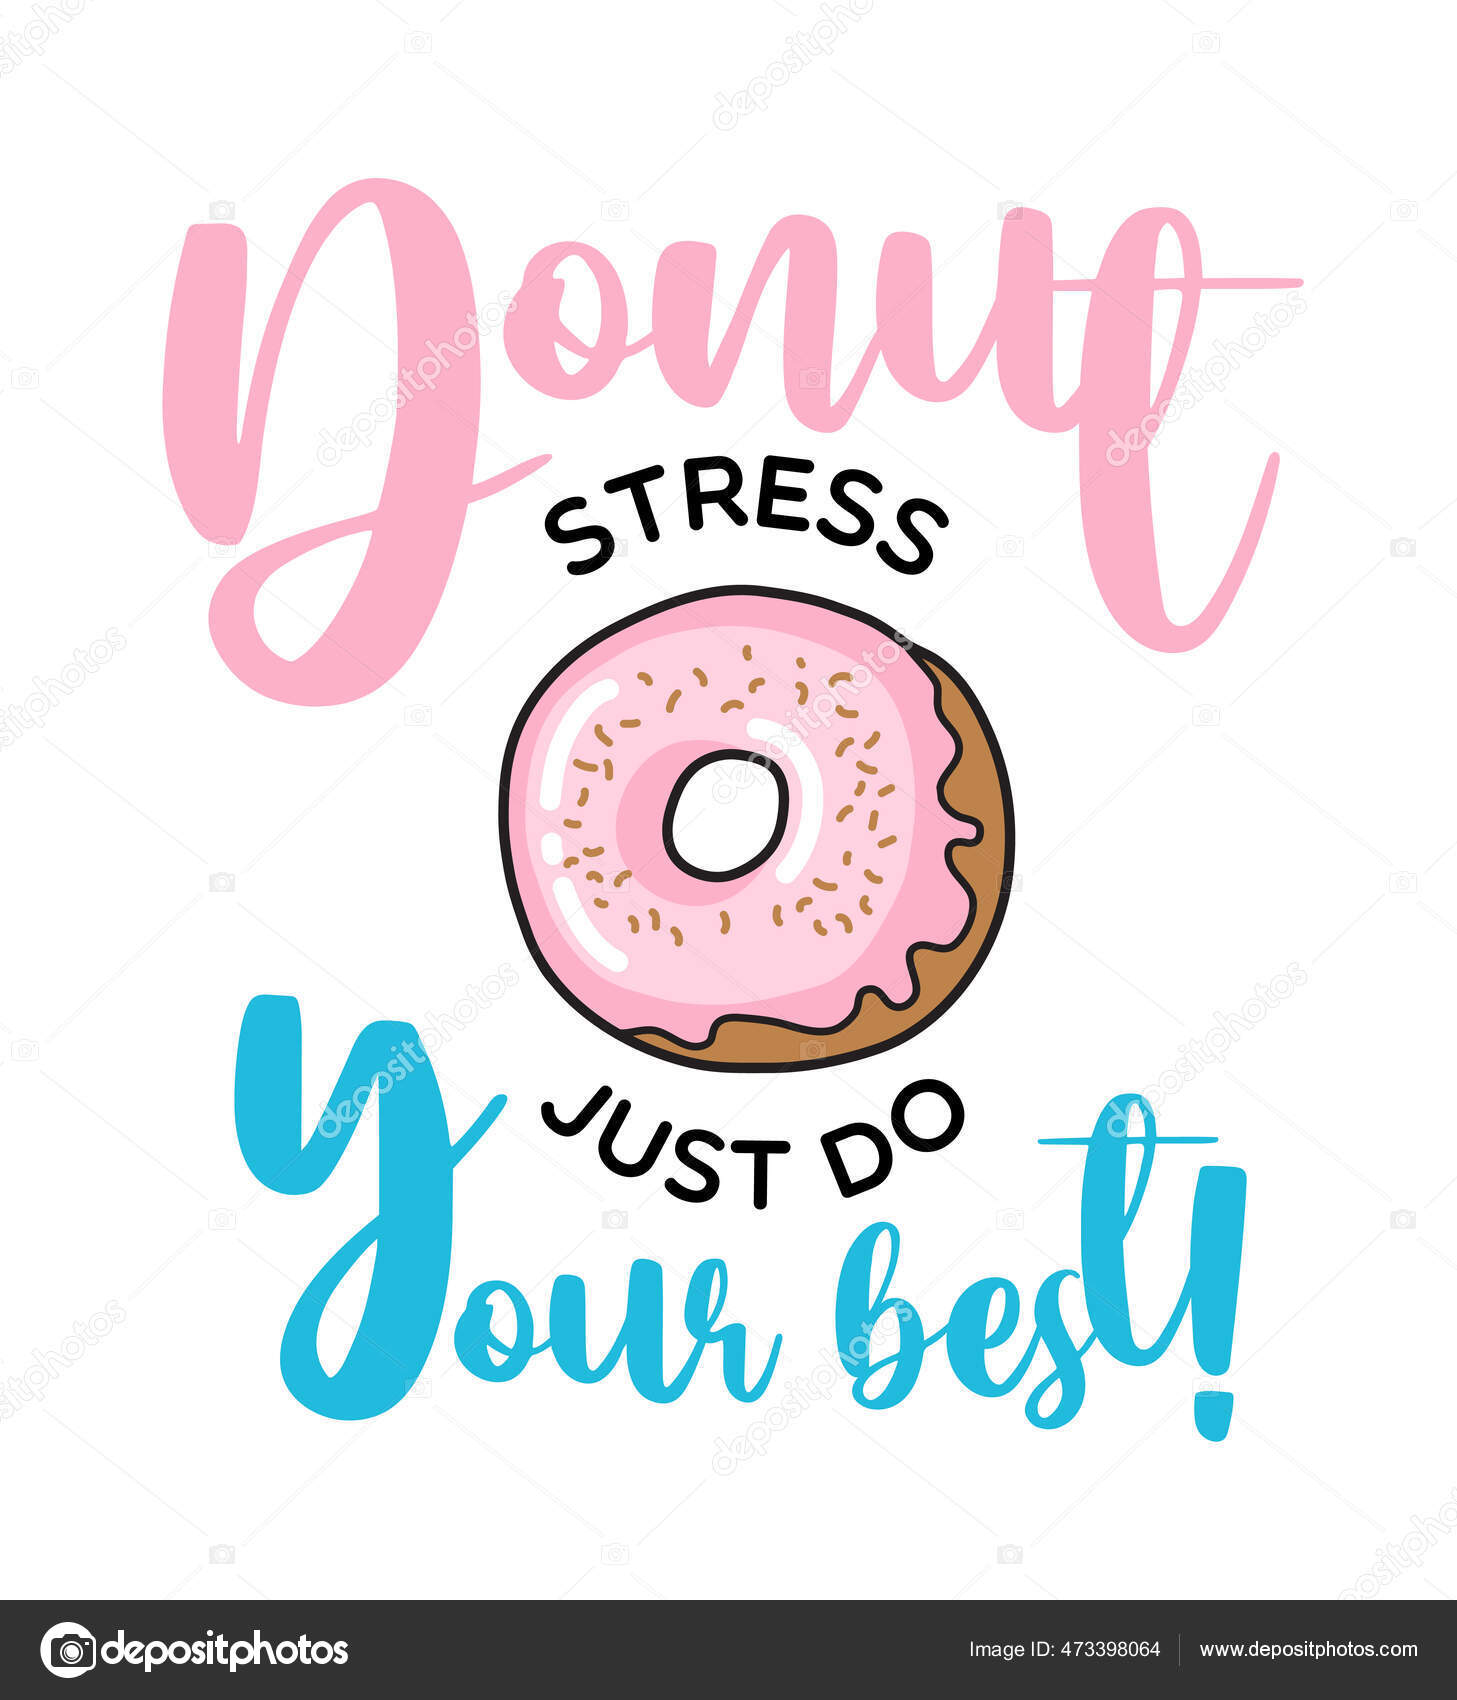 https://st2.depositphotos.com/1457895/47339/v/1600/depositphotos_473398064-stock-illustration-donut-stress-just-do-your.jpg